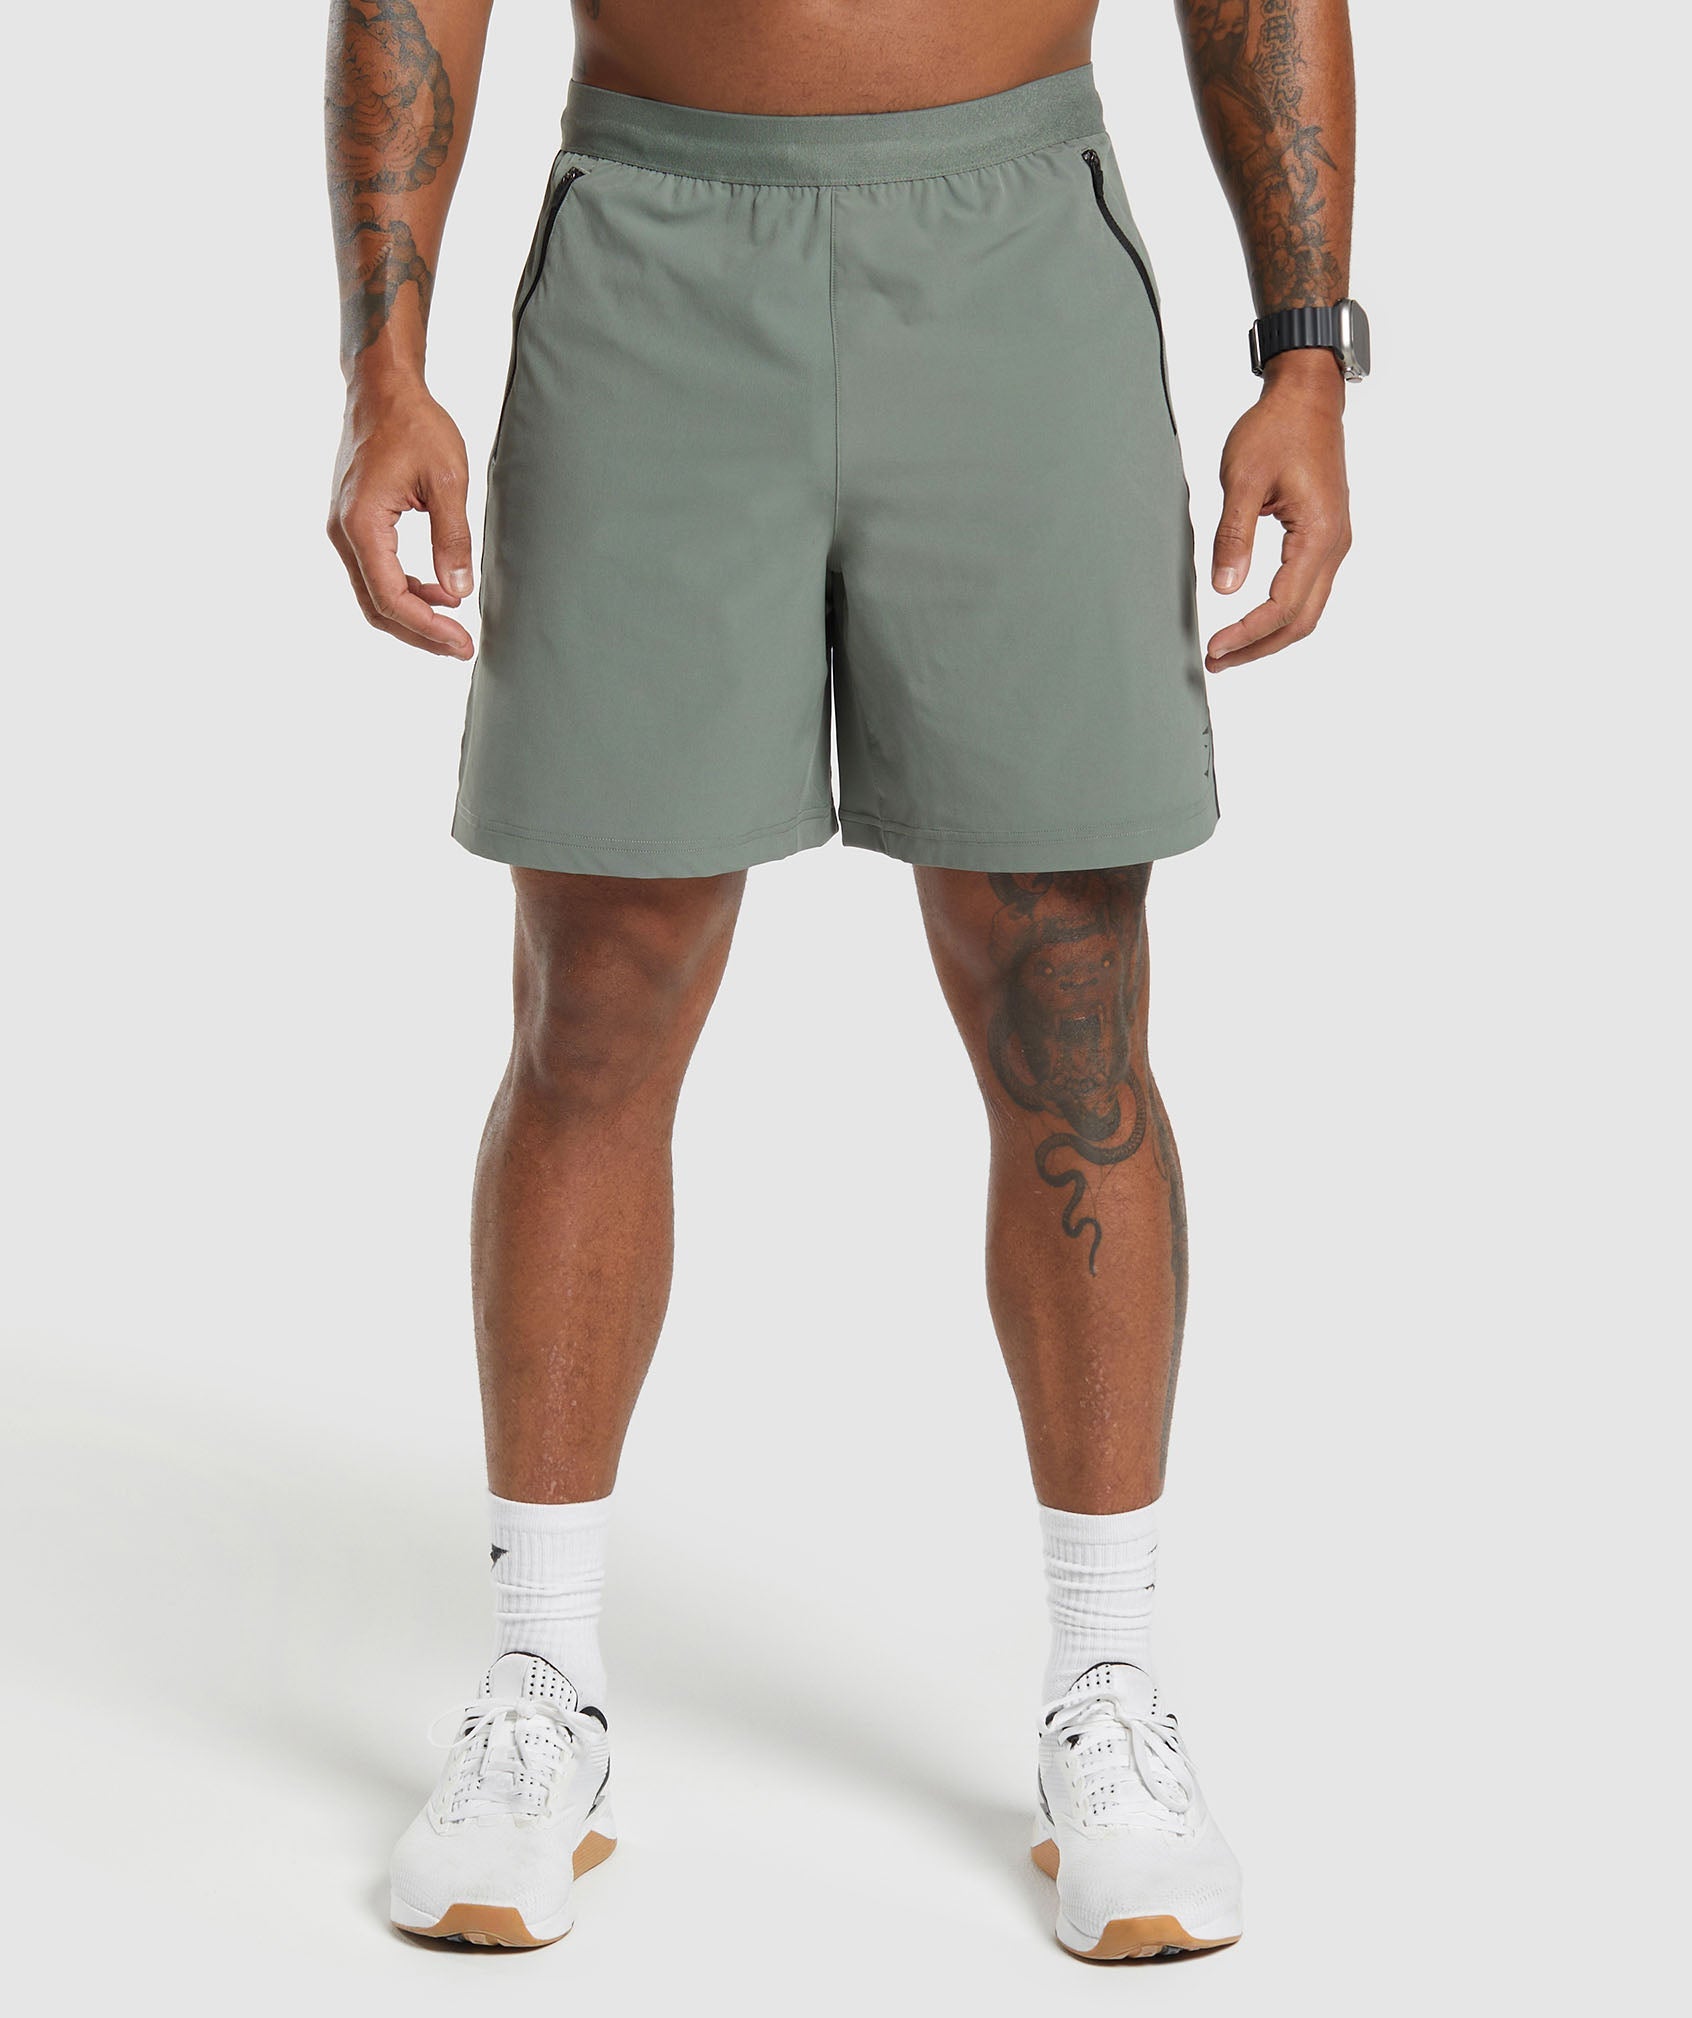 Apex 7" Hybrid Shorts in Unit Green